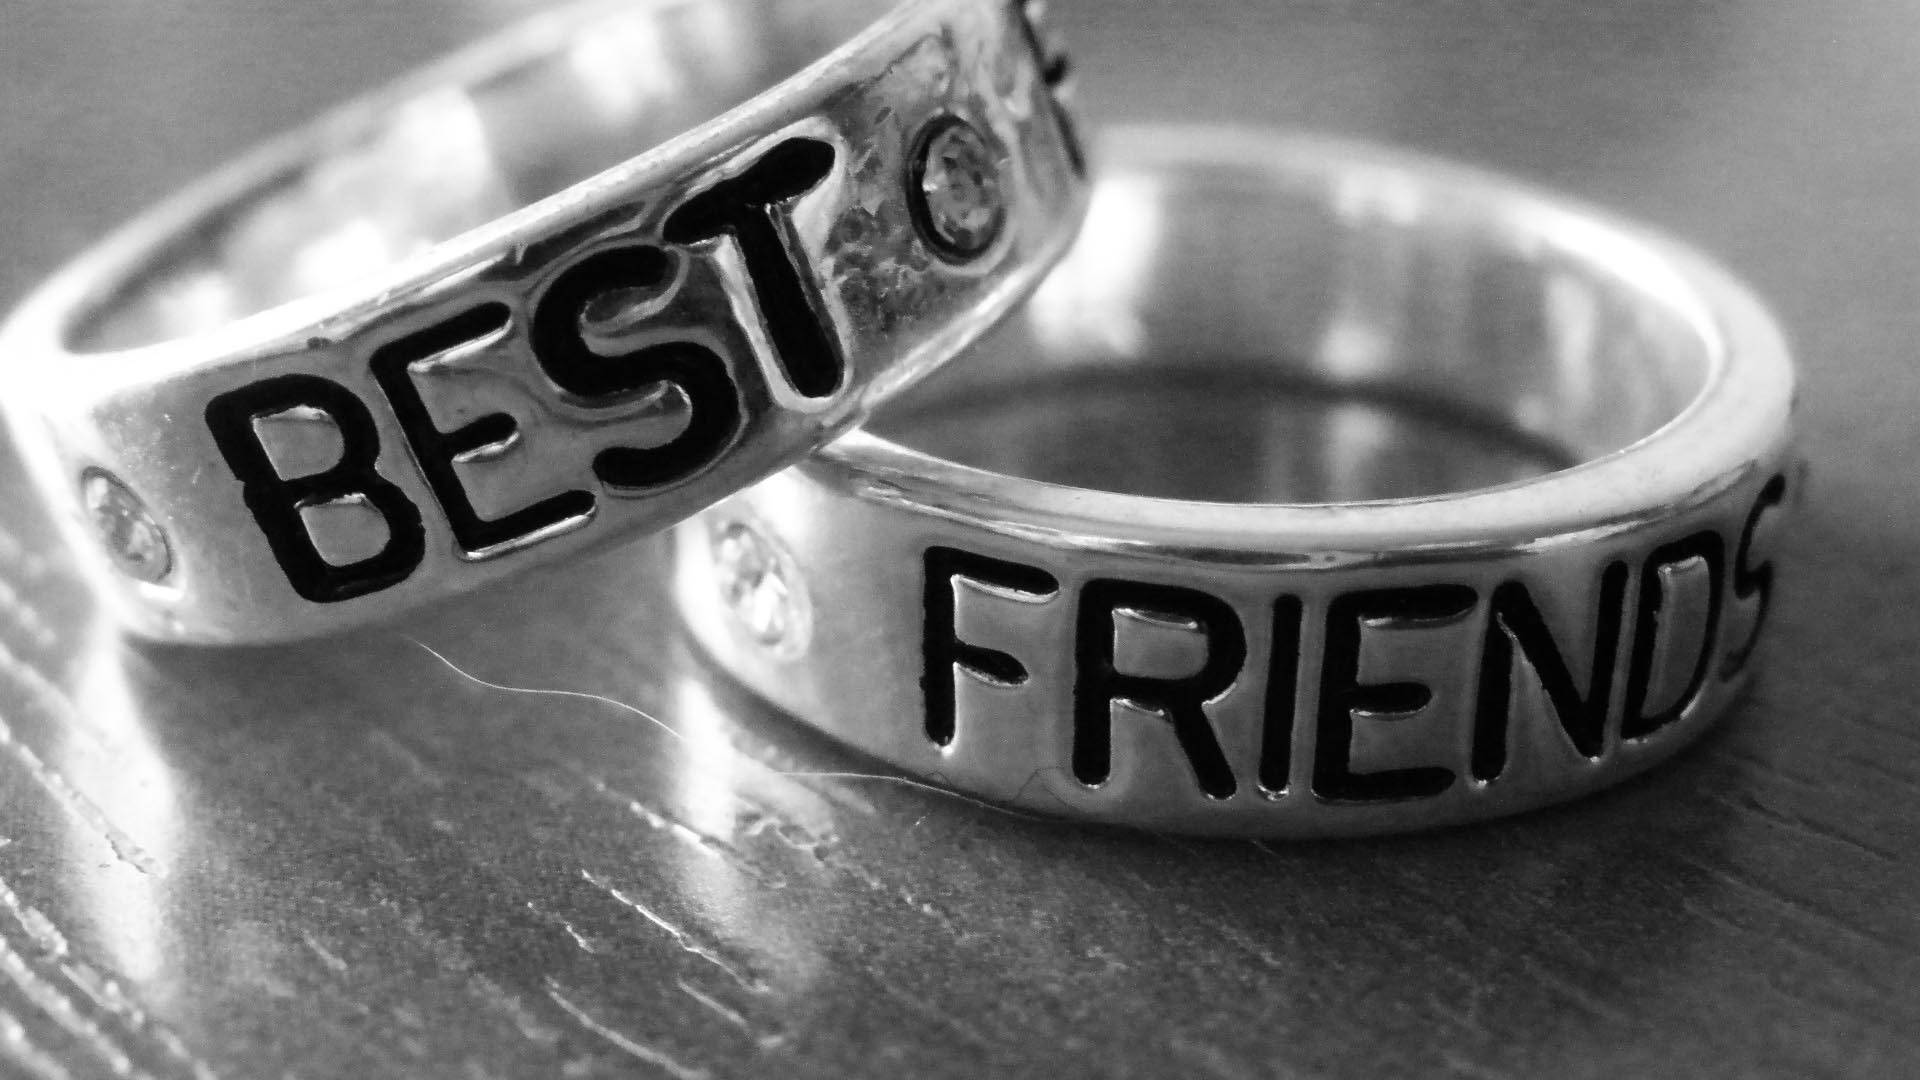 Cute Best Friend Rings